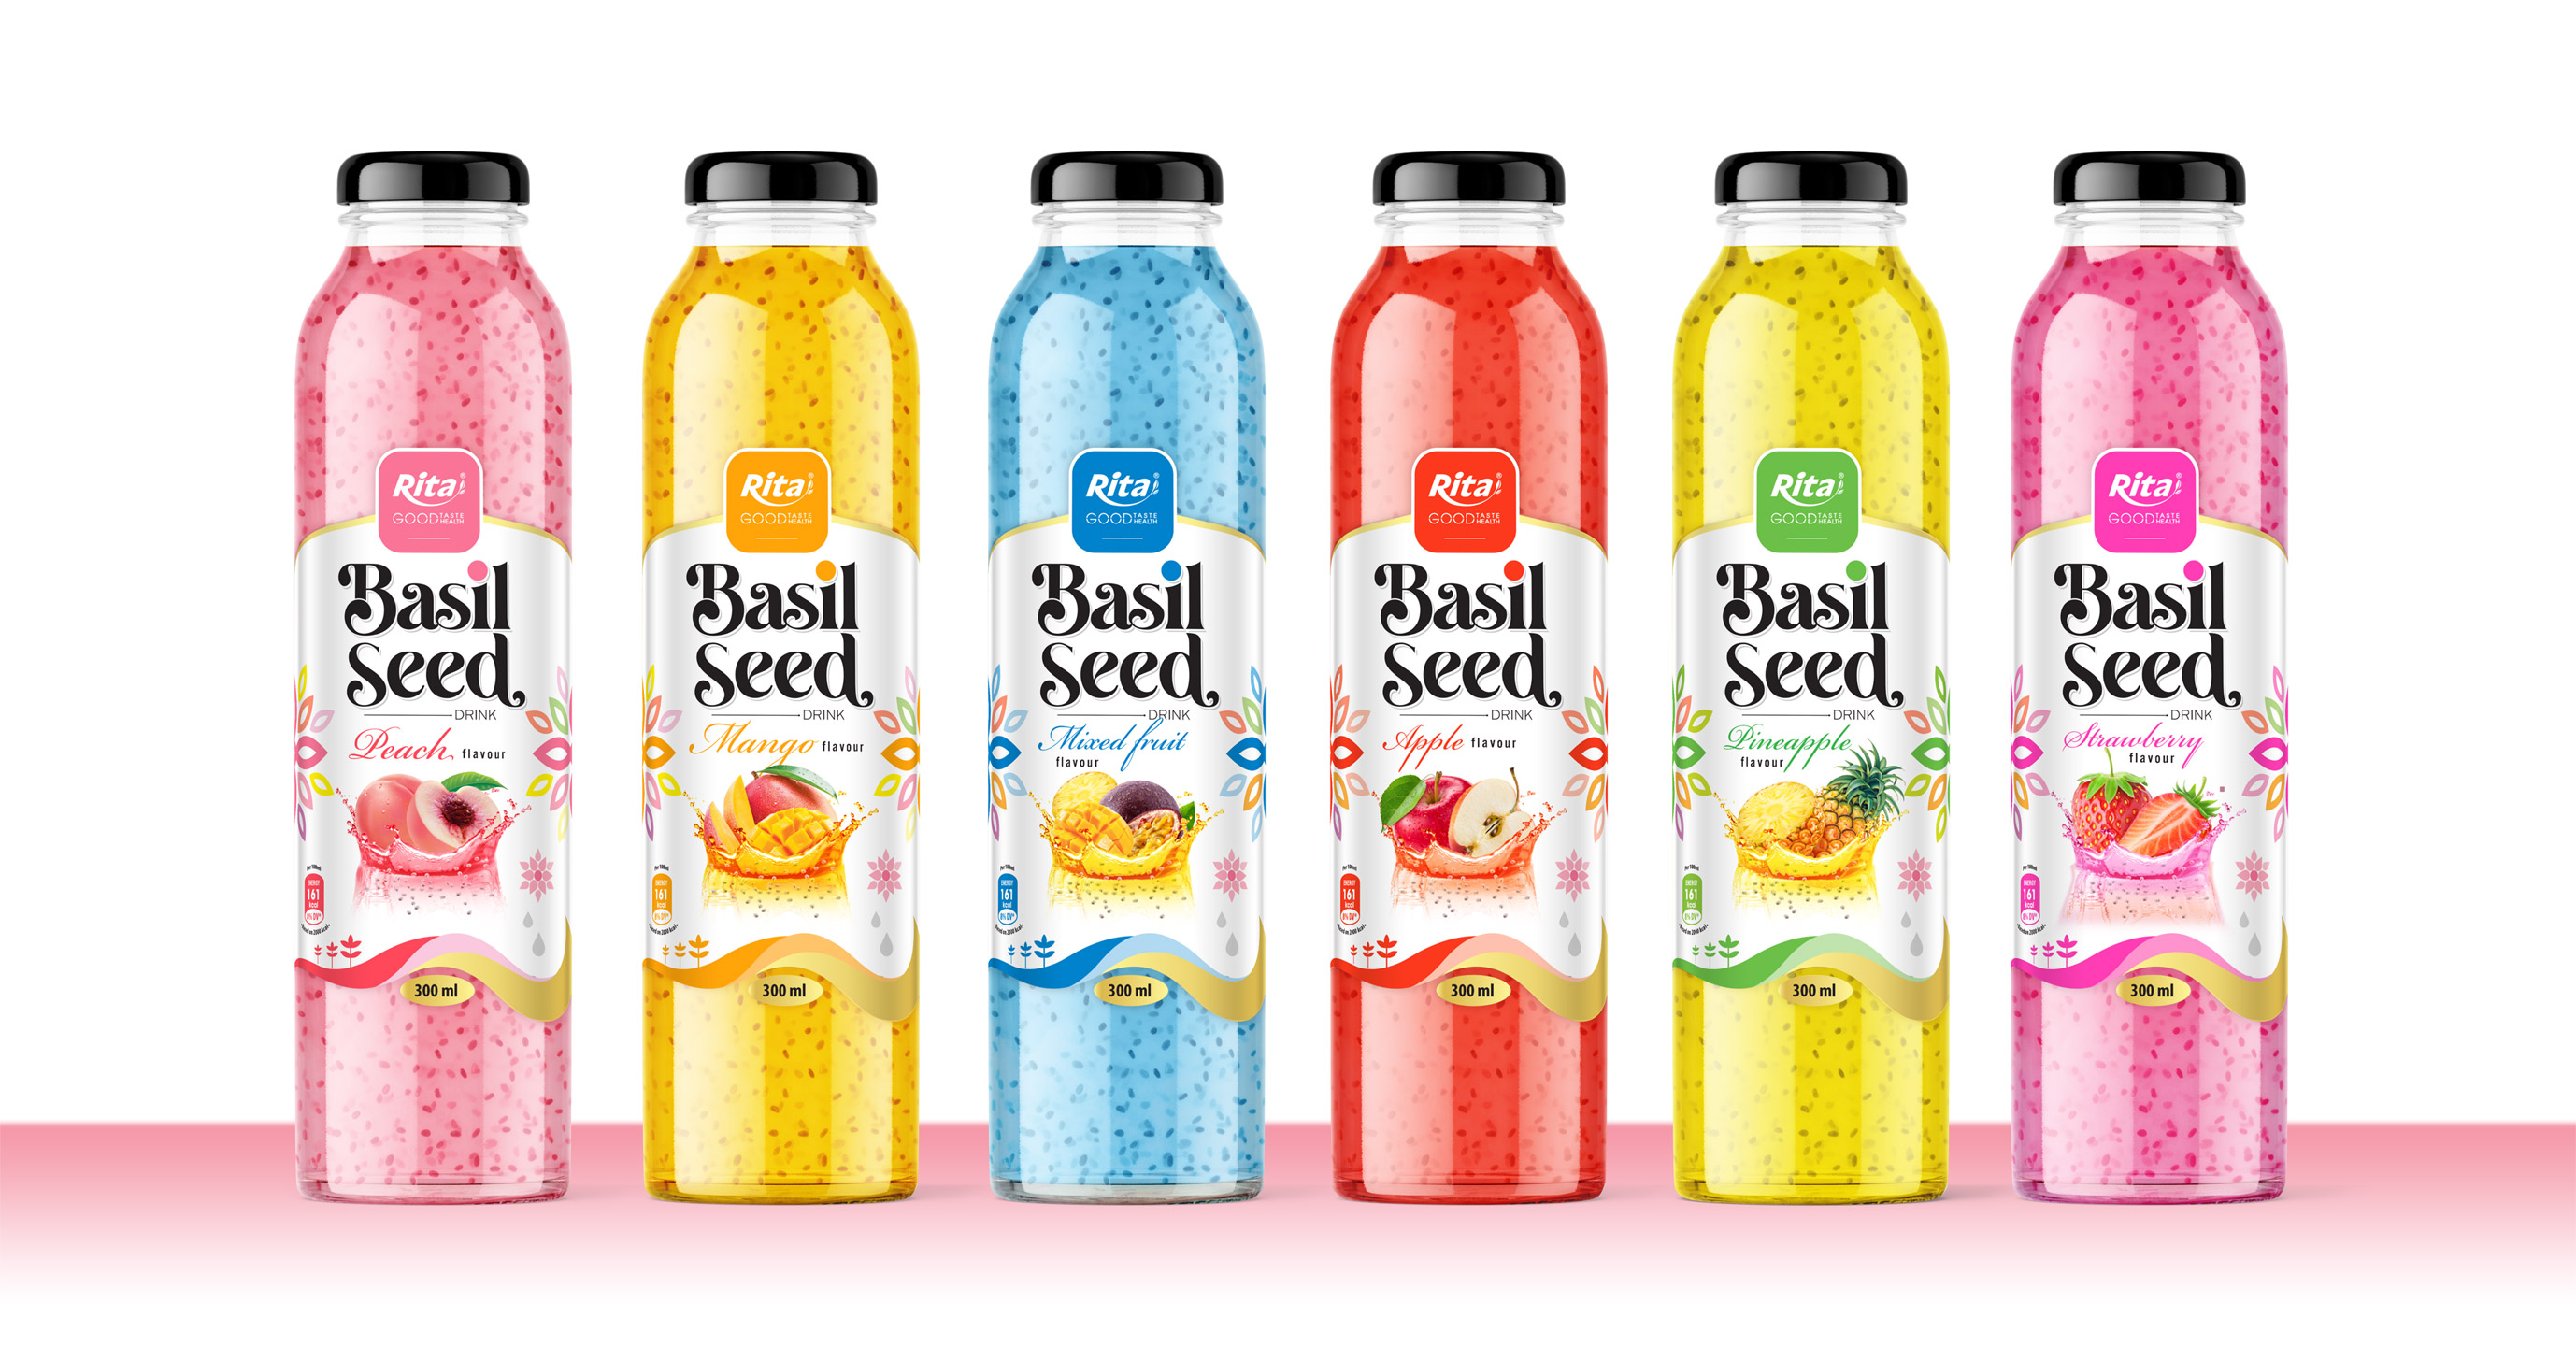 Basil seed drink 300ml